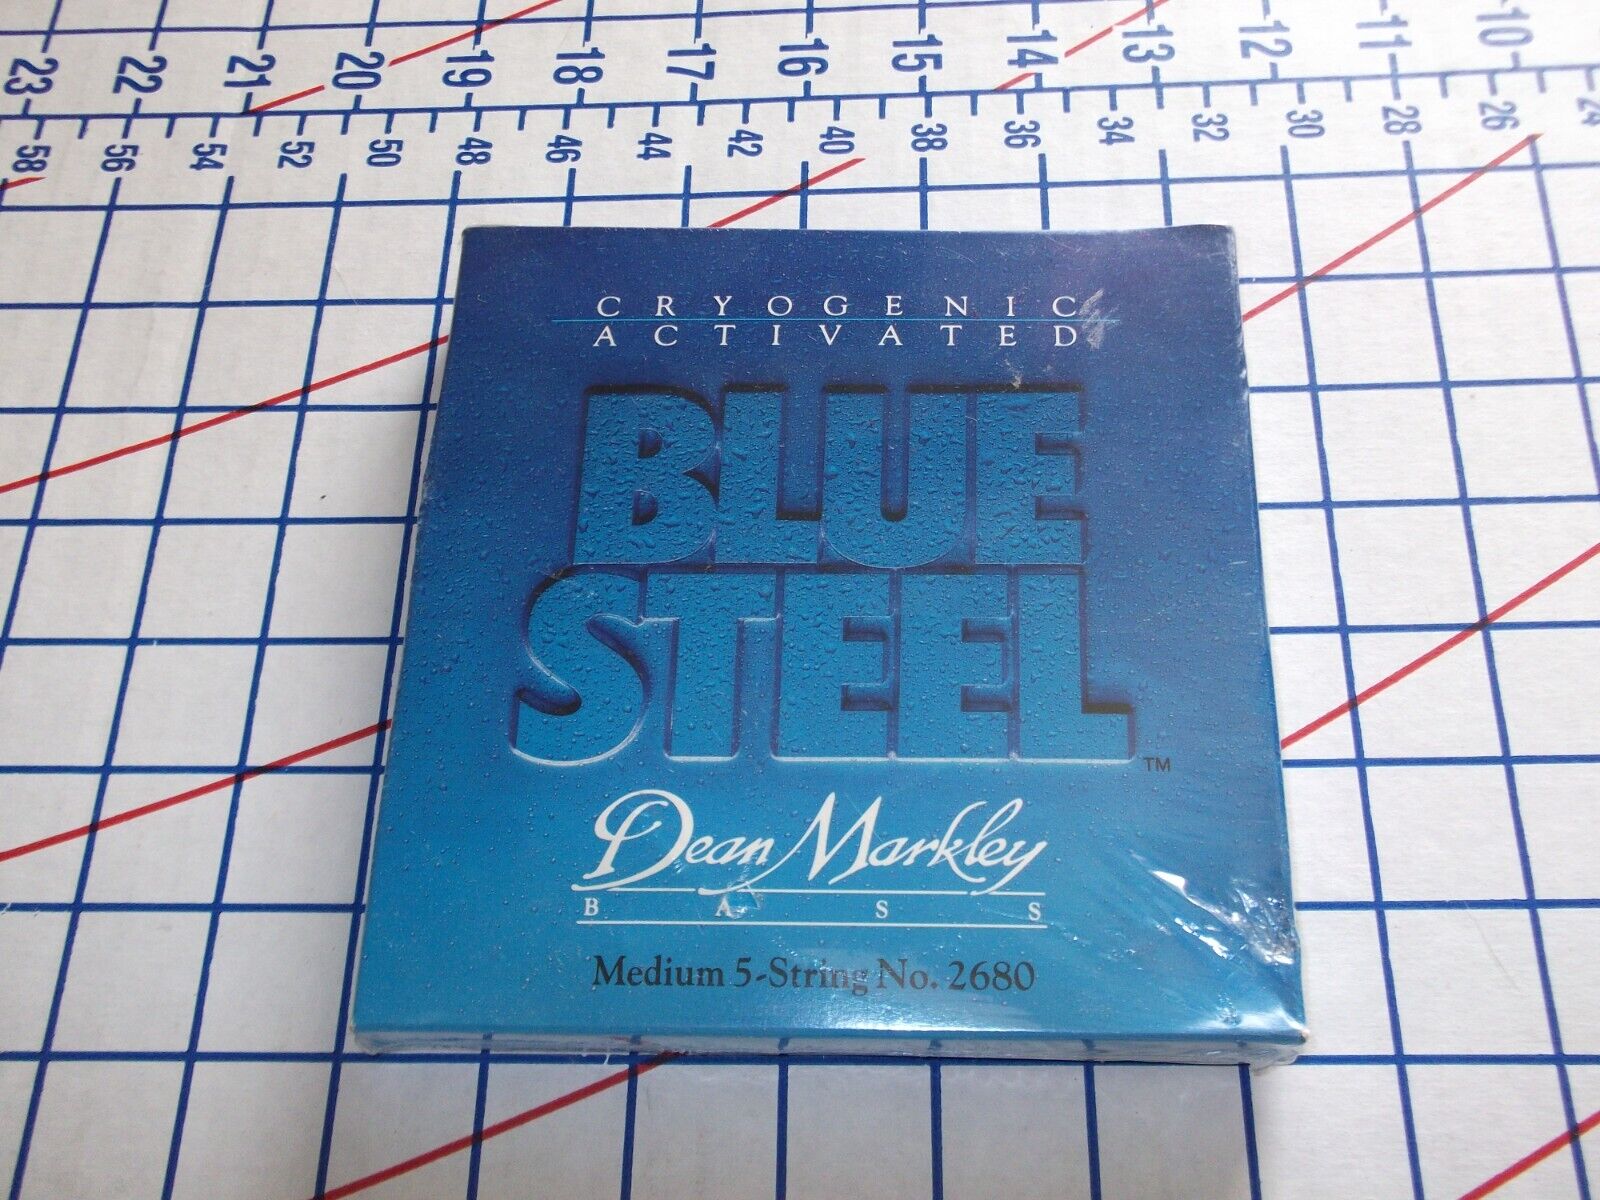 Dean Markley Strings Blue Steel Bass Medium 5-String No. 2680 